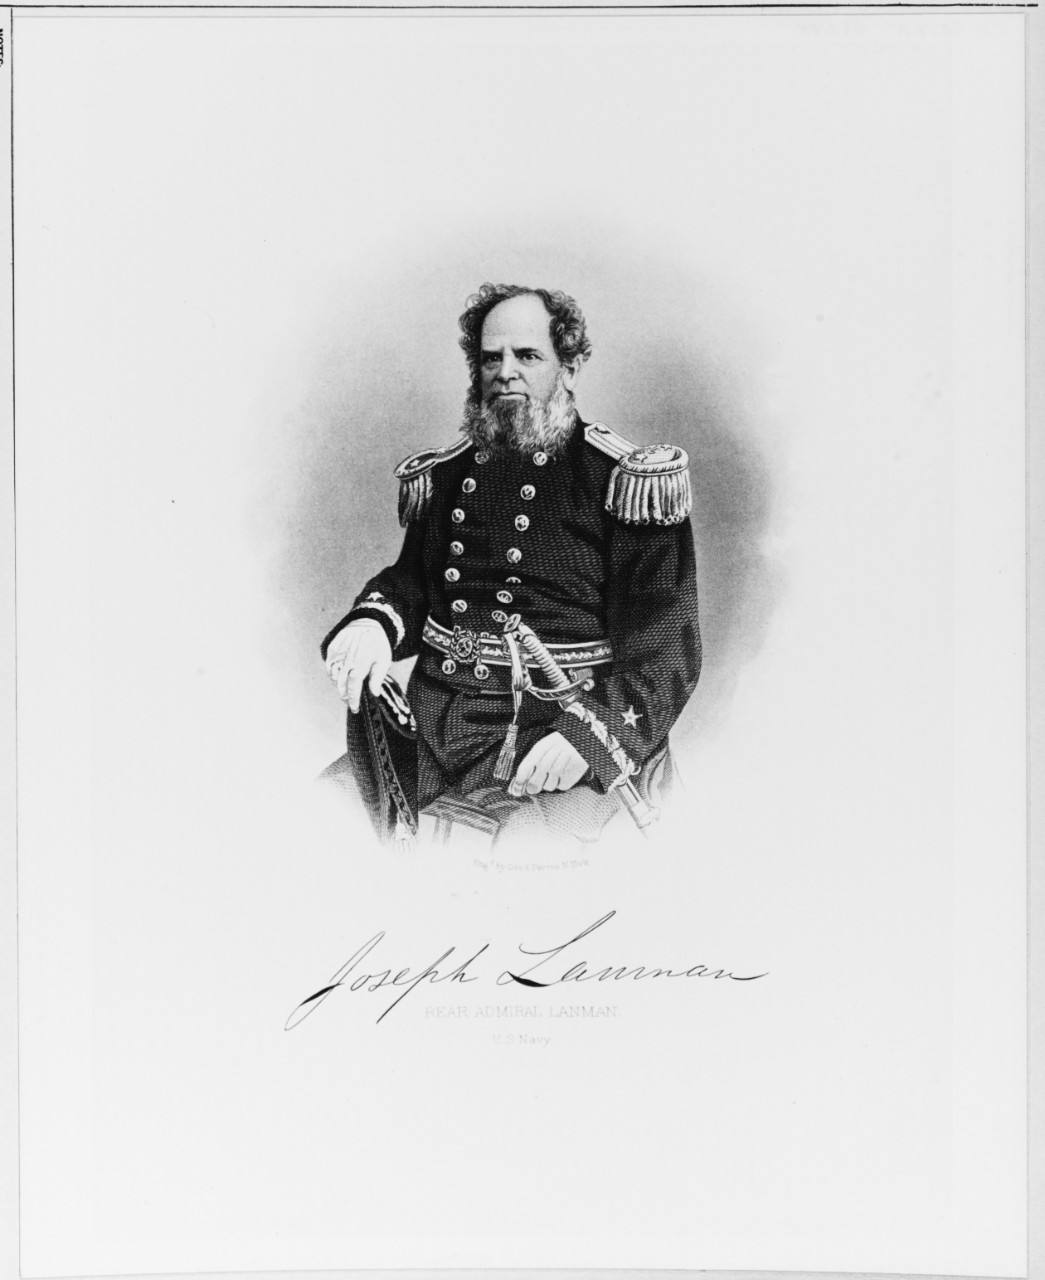 Rear Admiral Joseph Lanman, USN